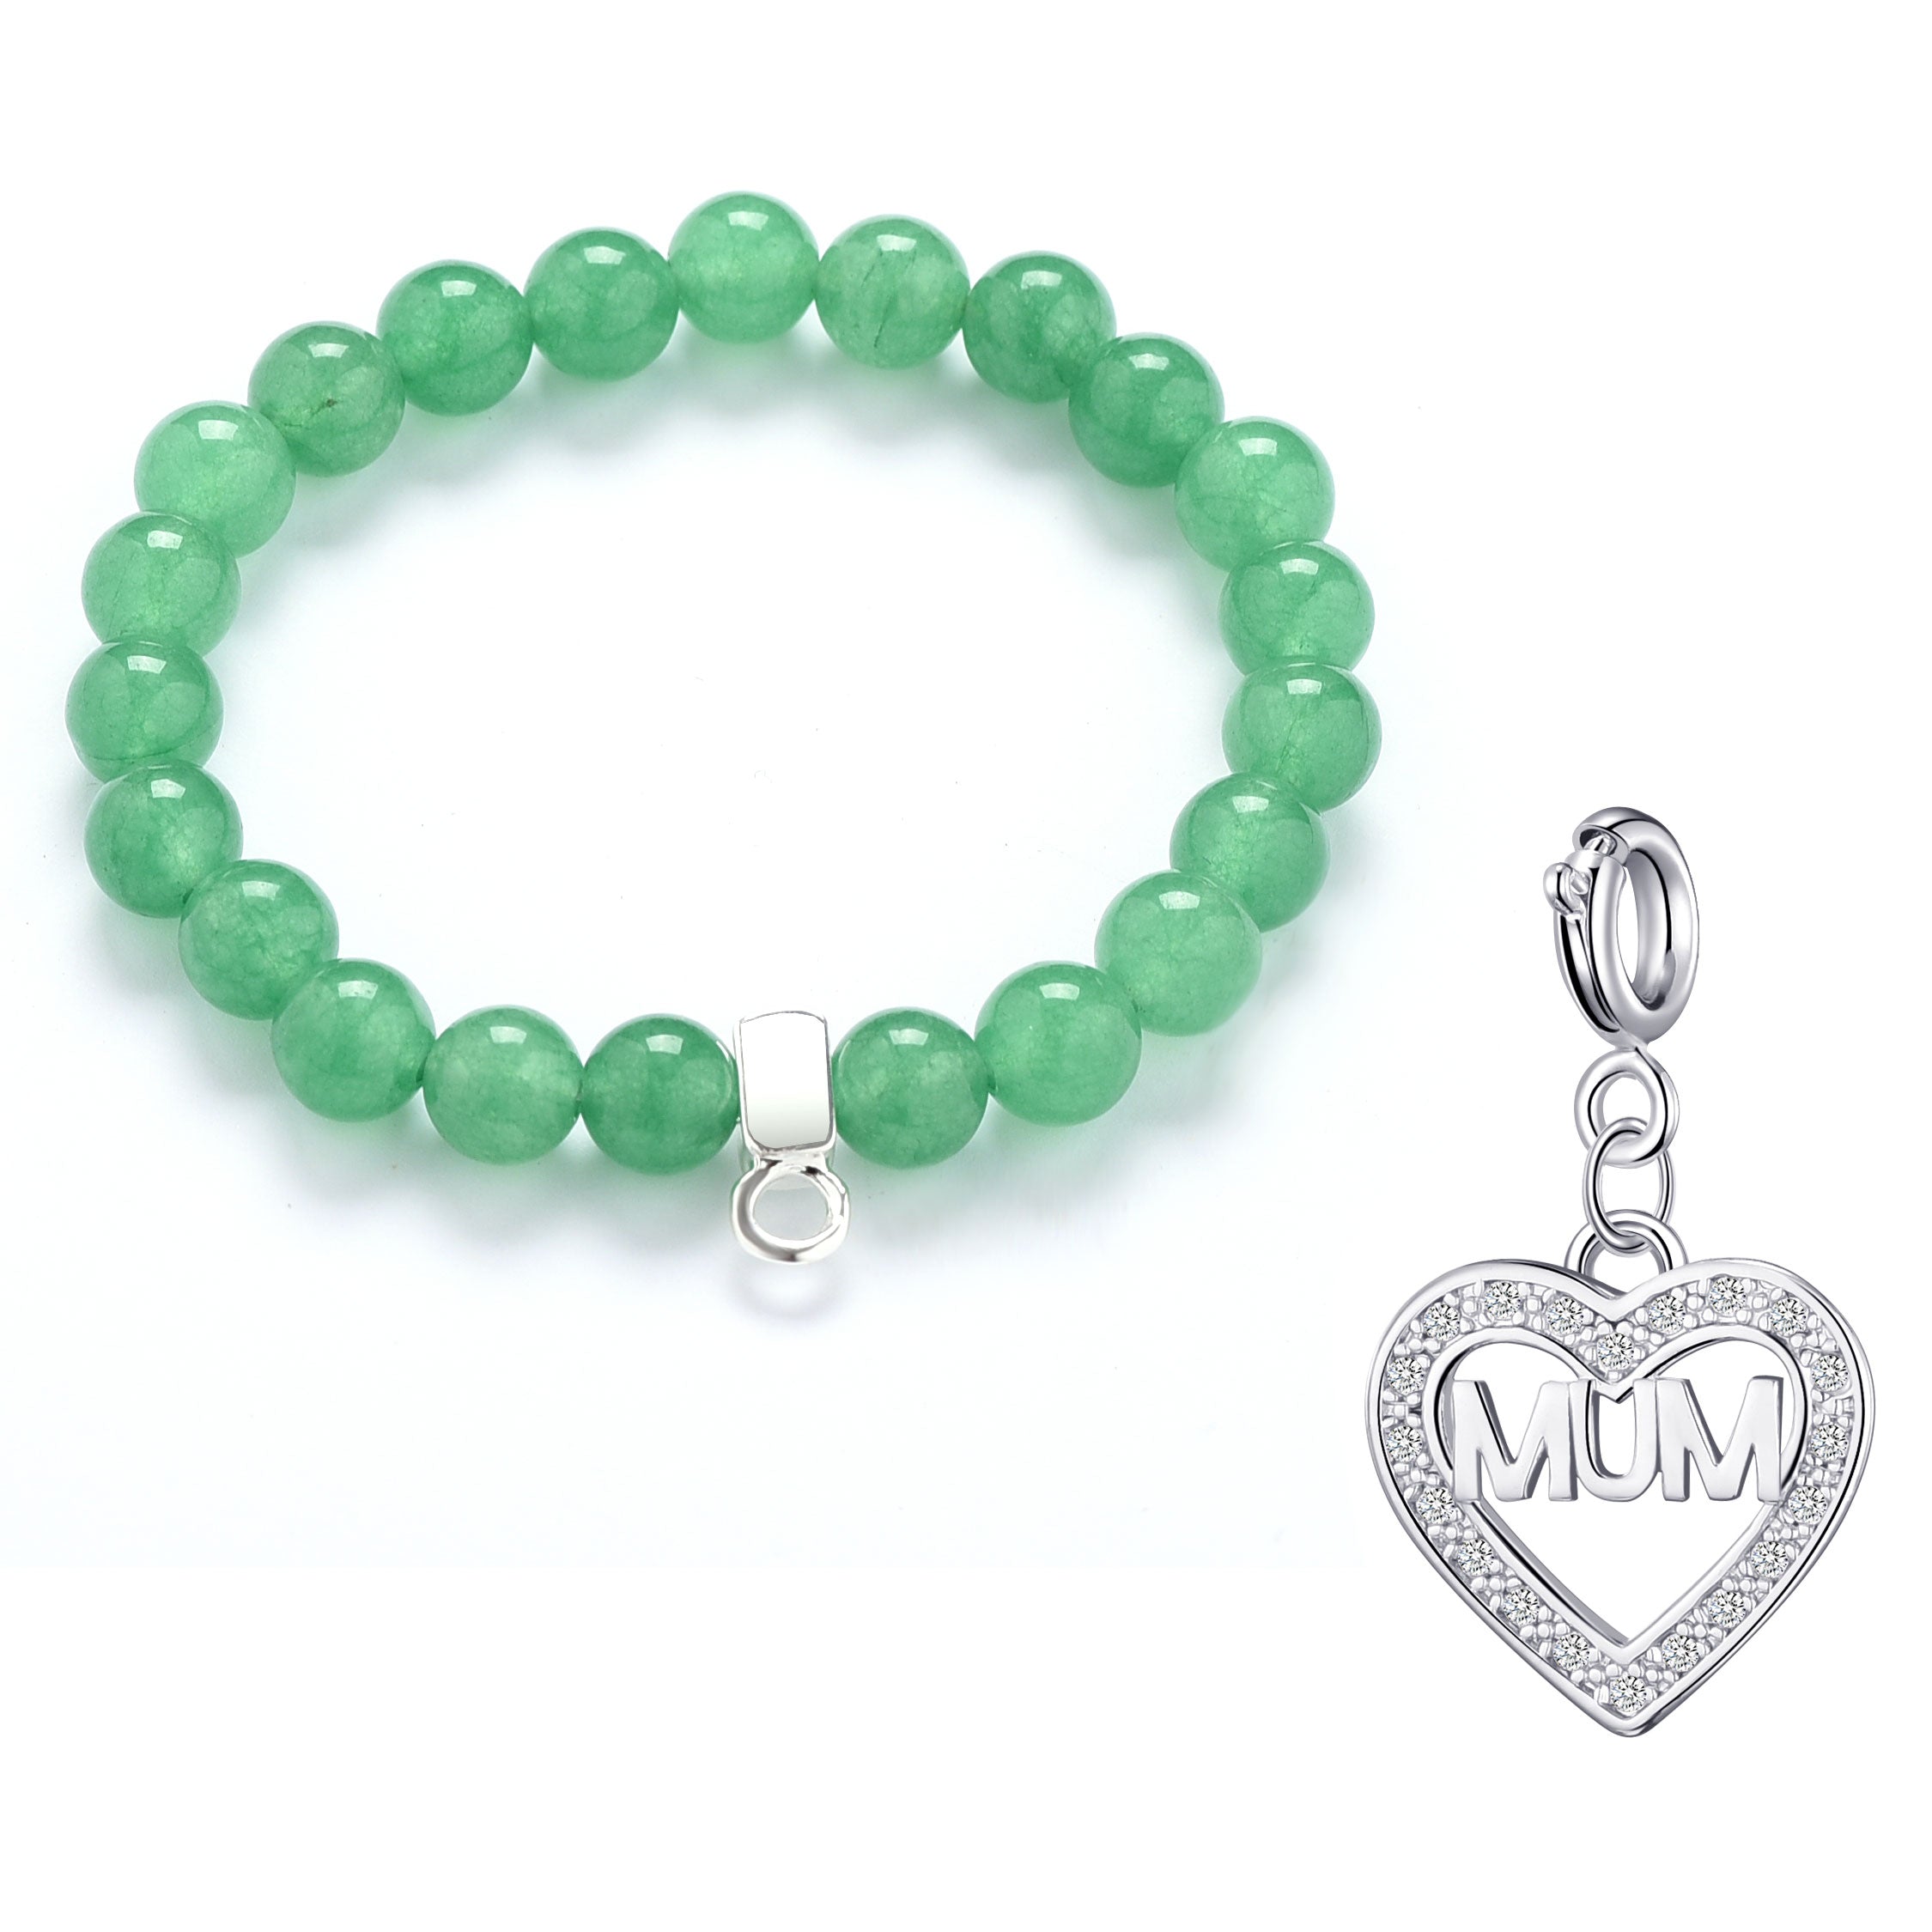 Green Aventurine Gemstone Bracelet with Charm Created with Zircondia® Crystals